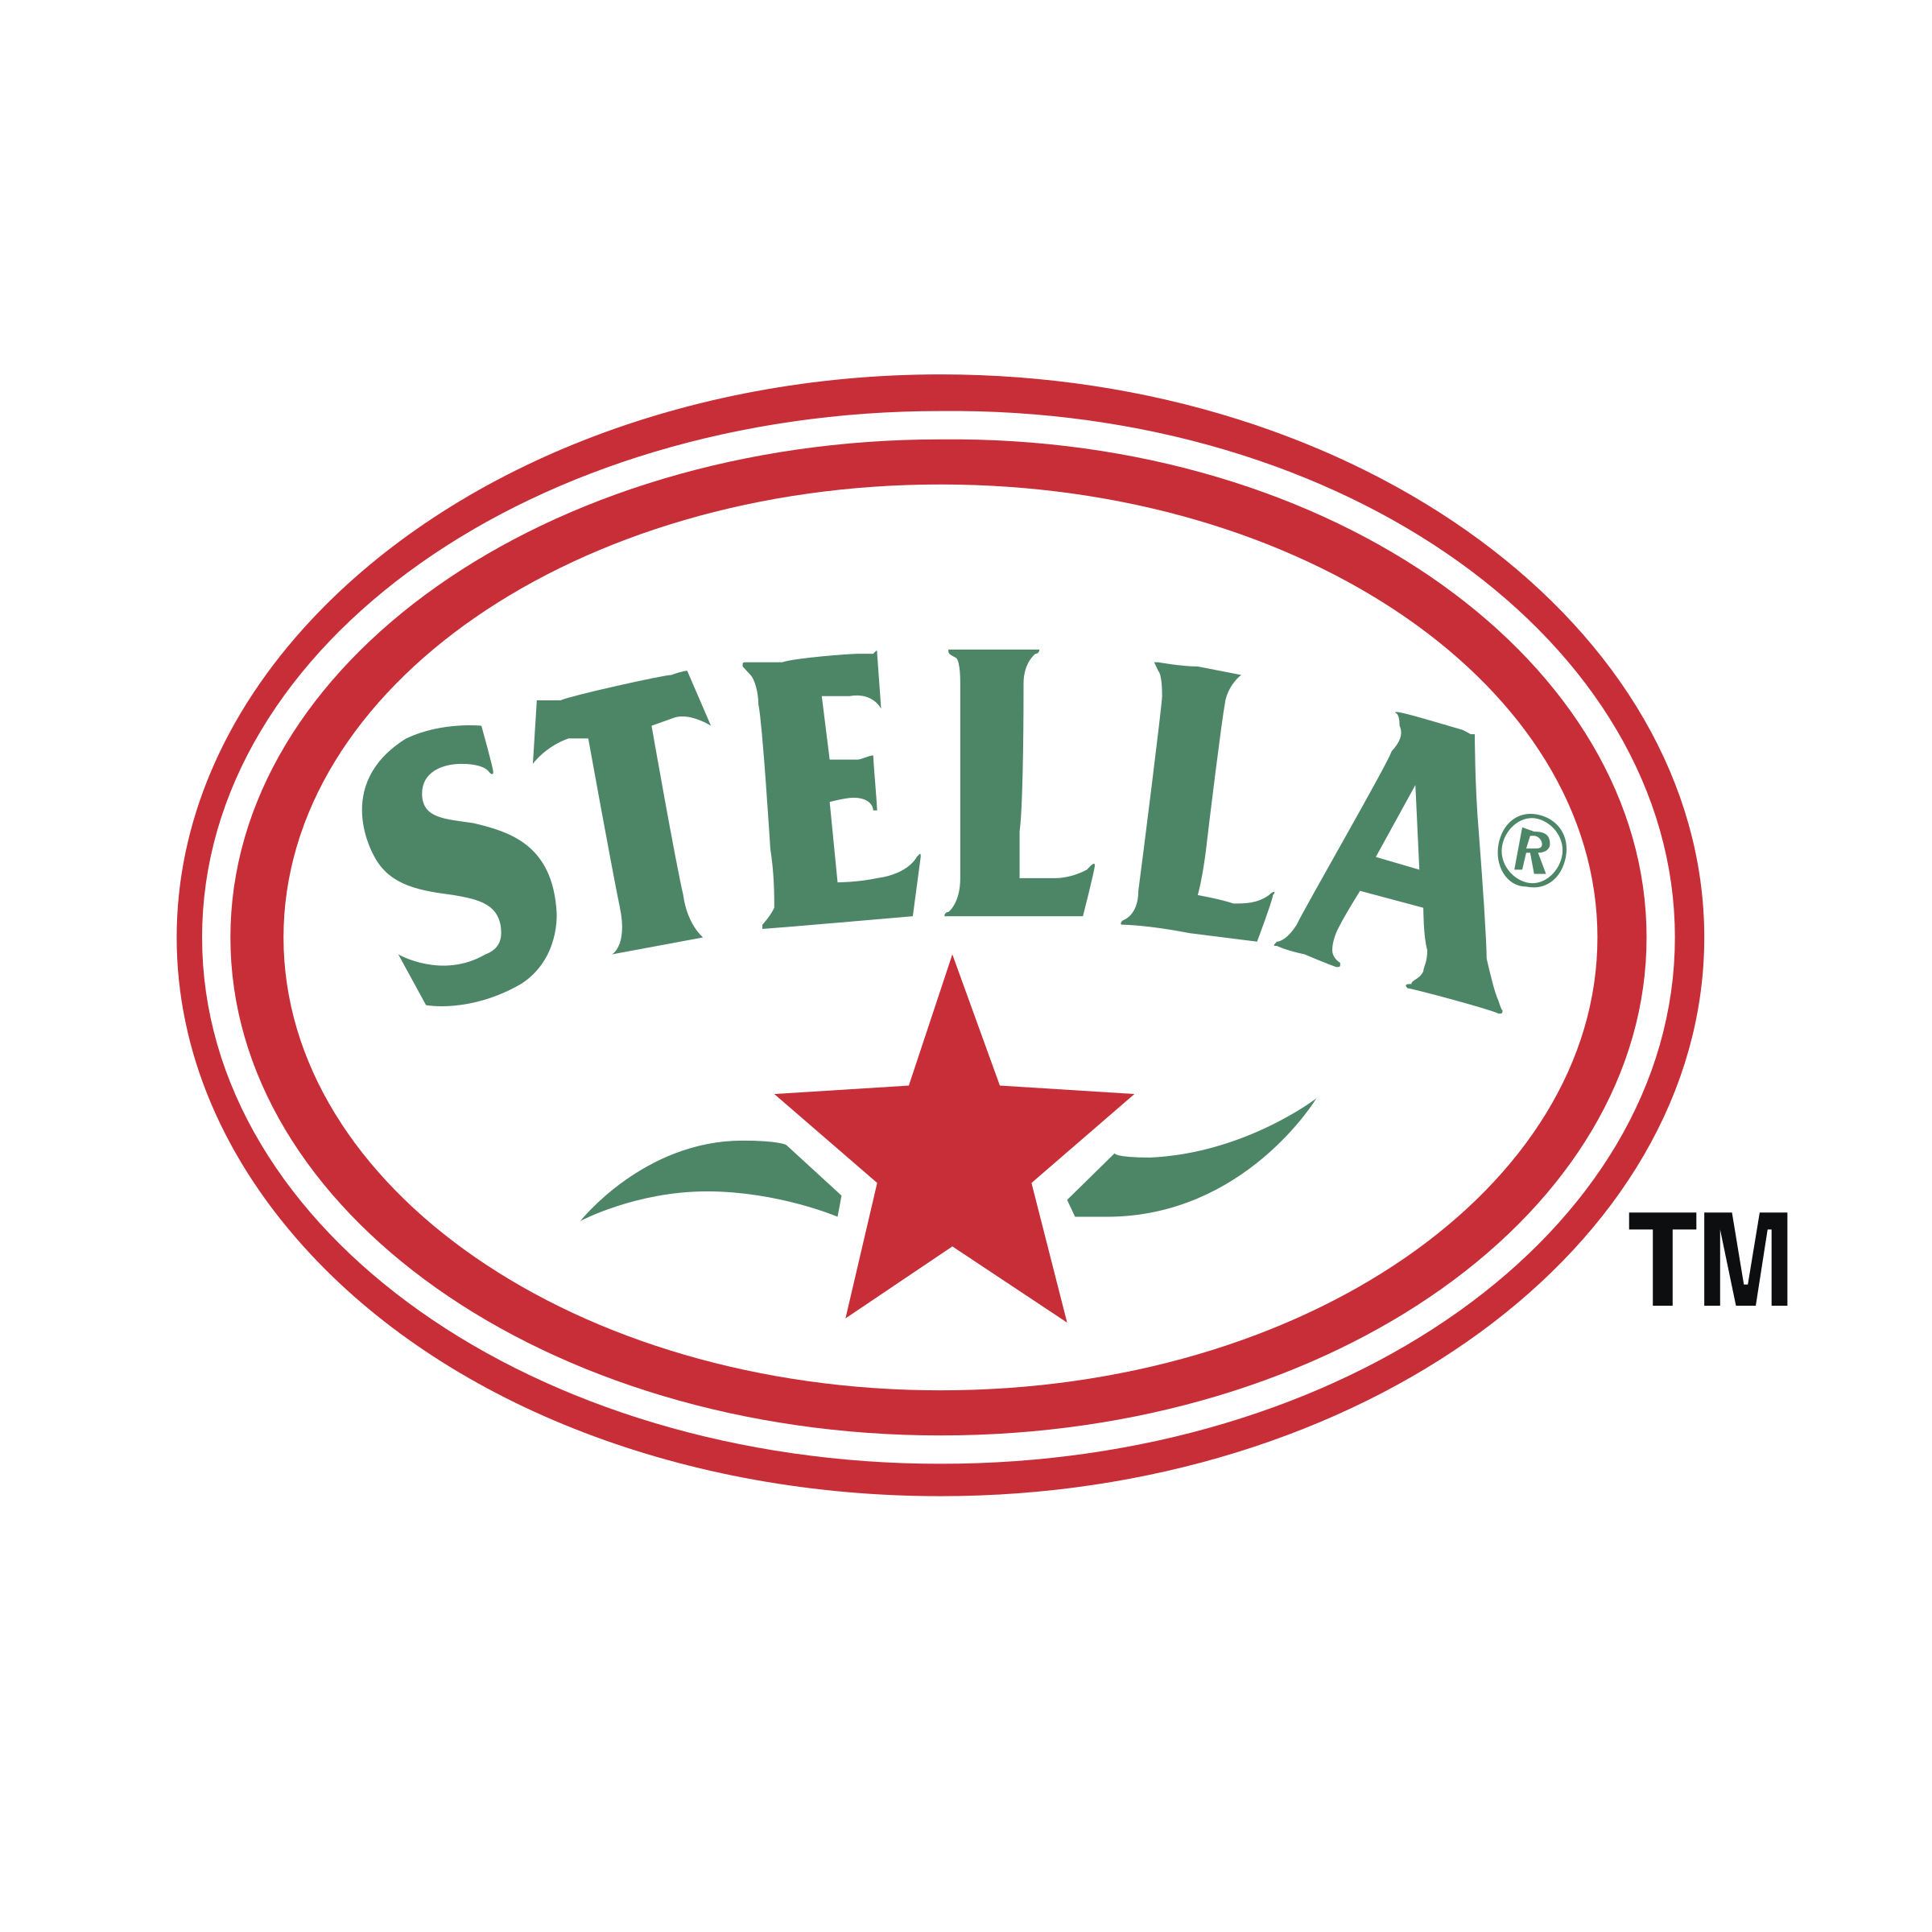 Stella Logo - Stella Logo PNG Transparent & SVG Vector